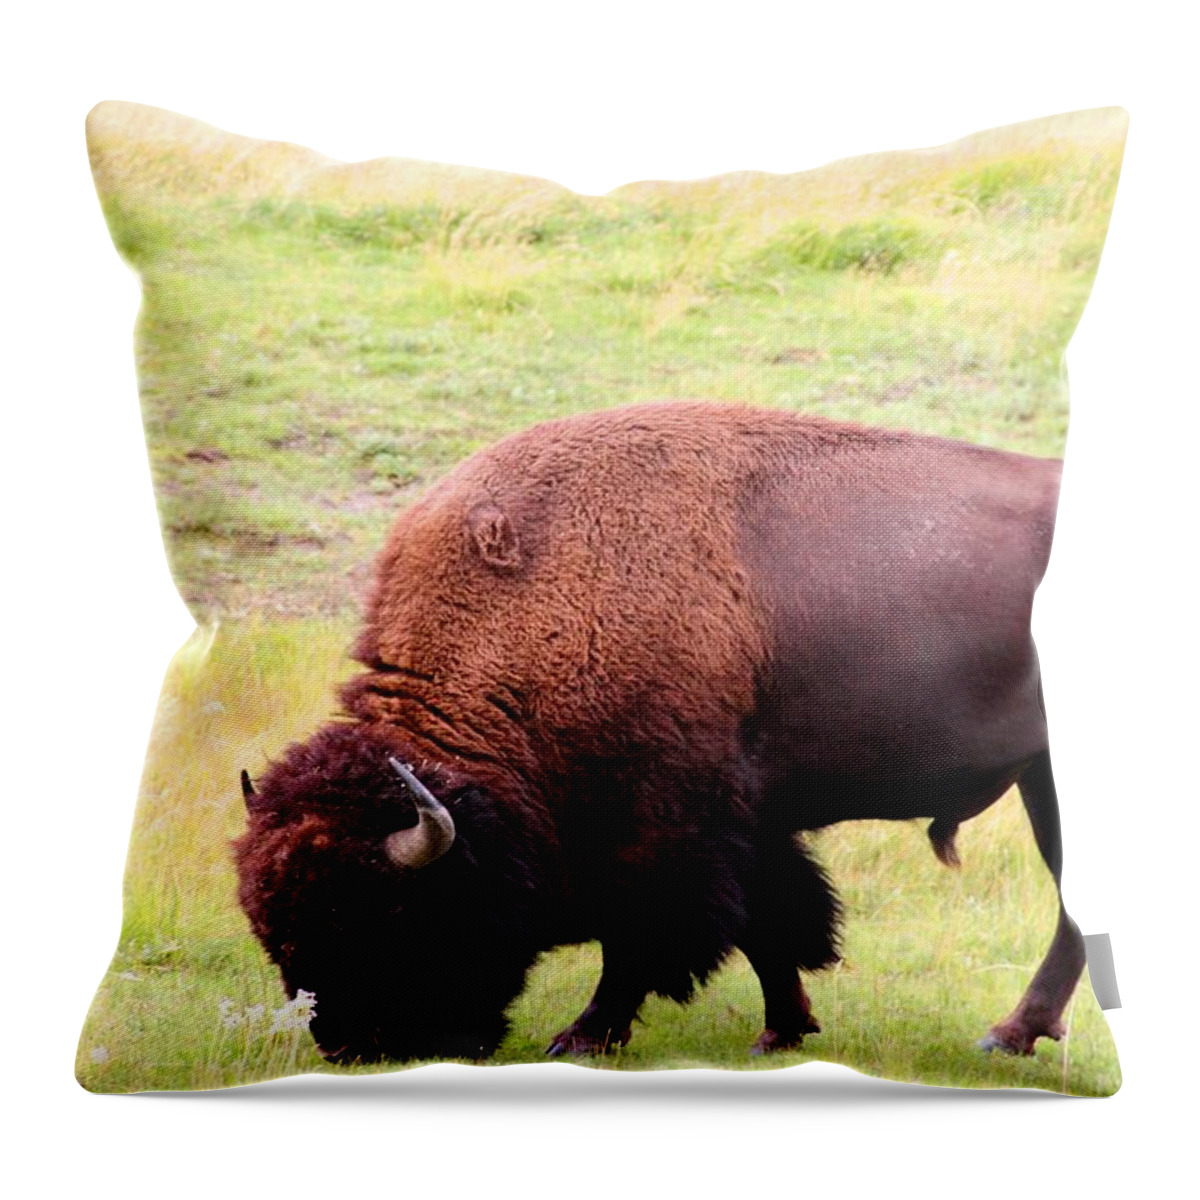 American Buffalo Throw Pillow featuring the photograph Buffalo Roaming by Charlene Reinauer